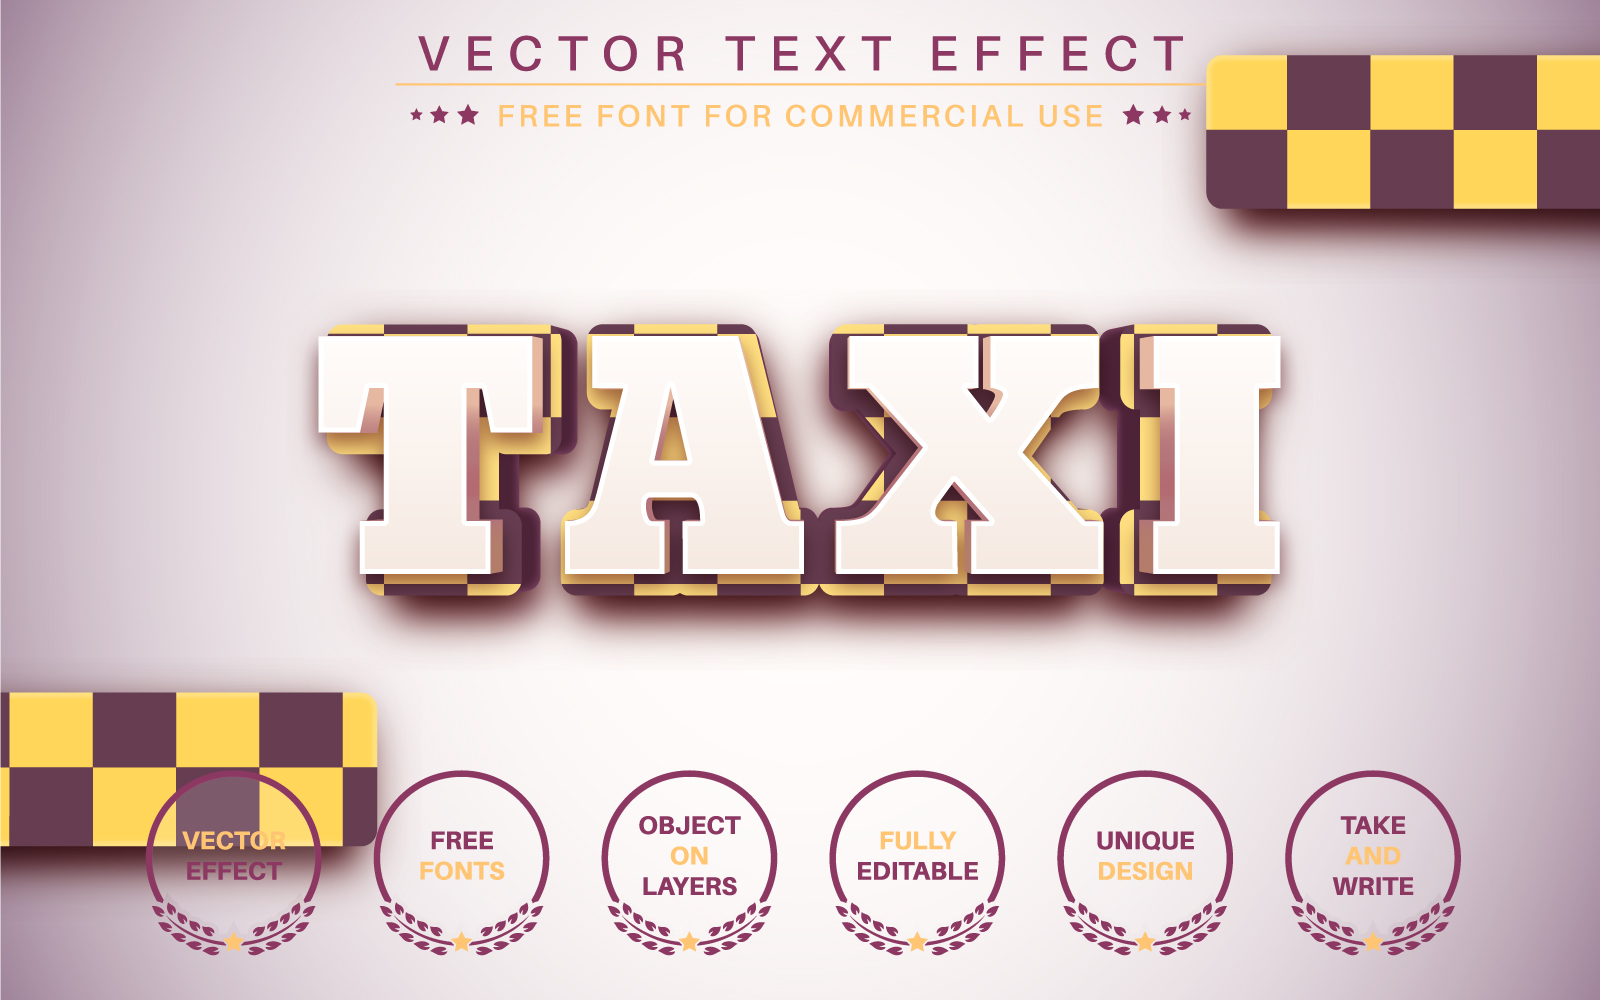 Taxi -  Editable Text Effect, Font Styleб Пкфзршсы Шддгыекфешщт